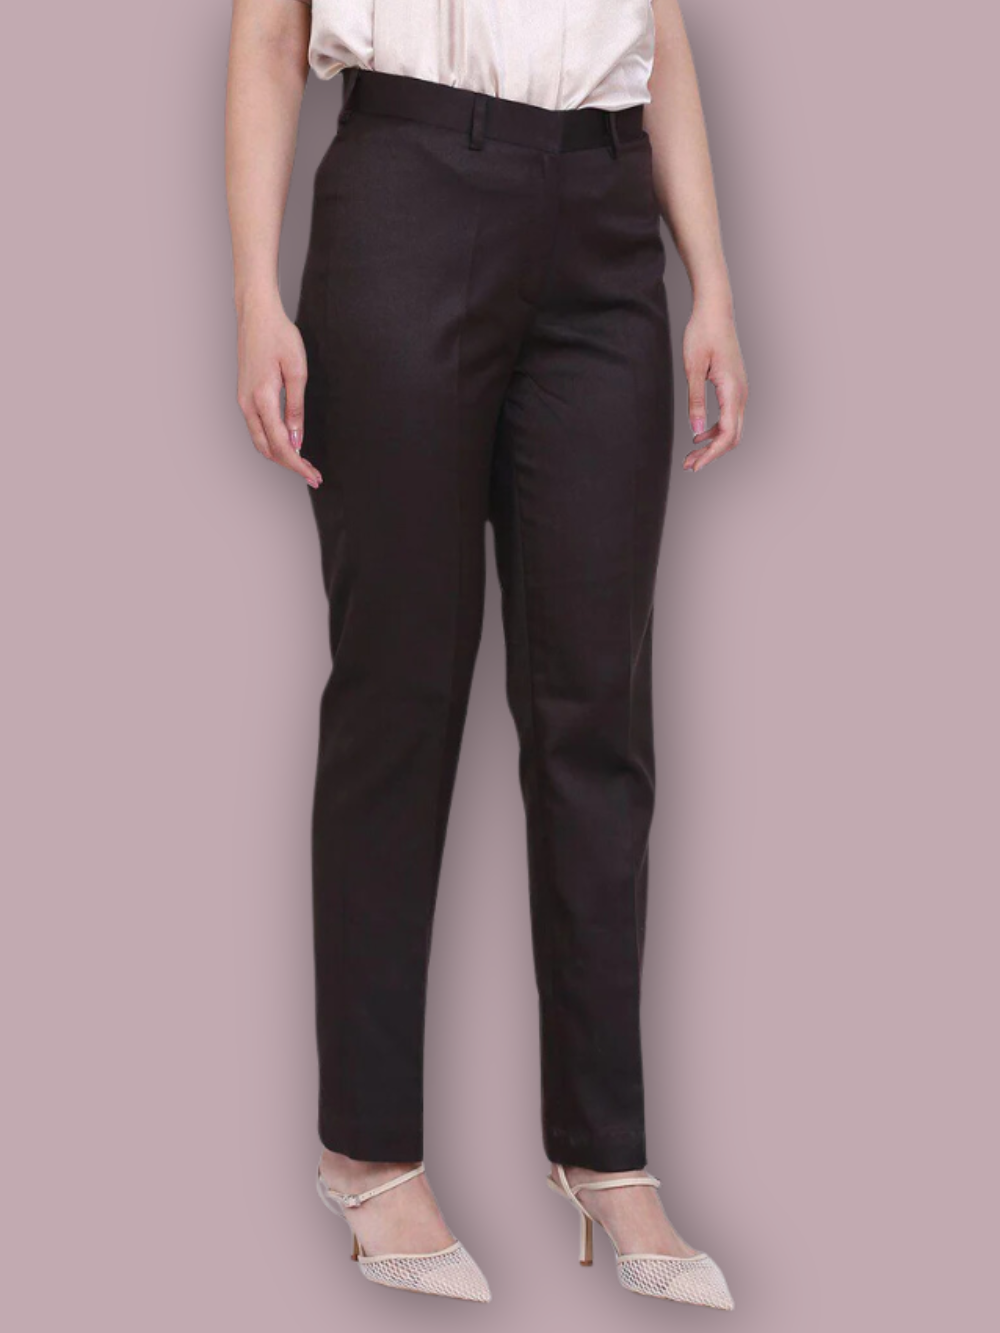 Women's Work Trousers | Skinny & Slim Fit Work Pants | ASOS